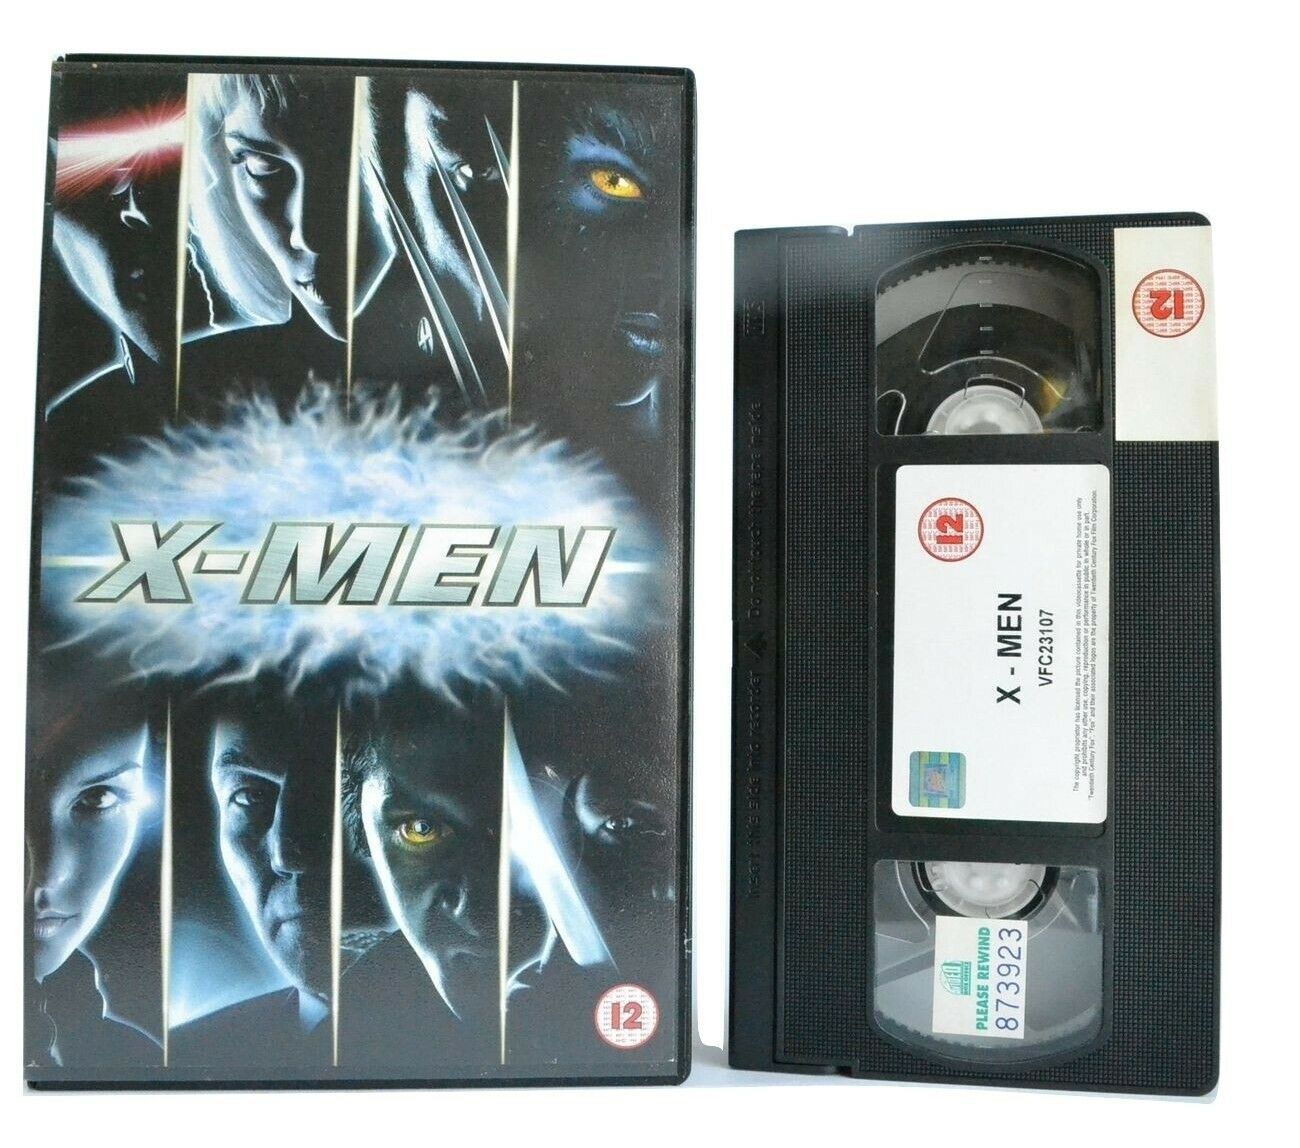 X-Men (2000): Superhero Movie - Large Box - Hugh Jackman/Halle Berry - VHS-